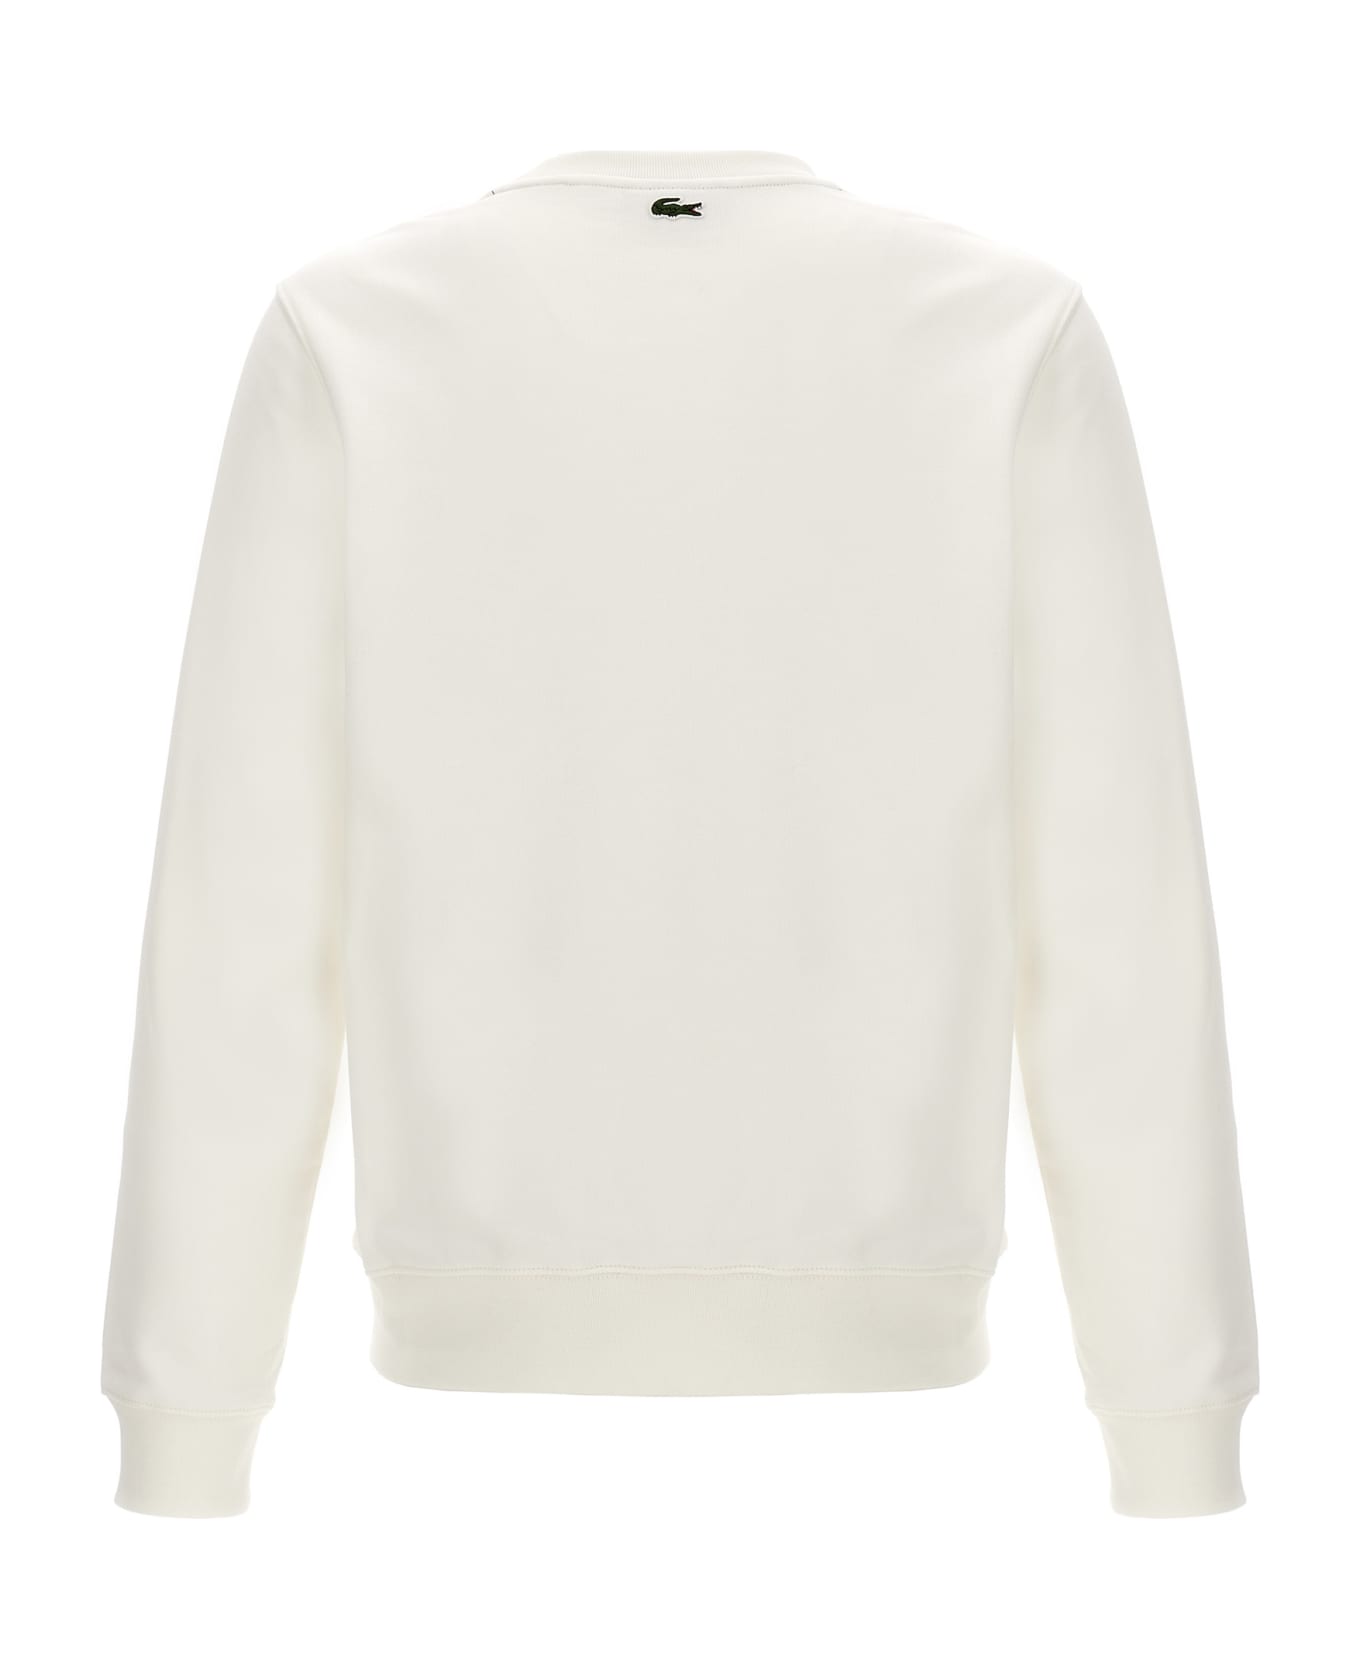 Lacoste Logo Print Sweatshirt - White フリース